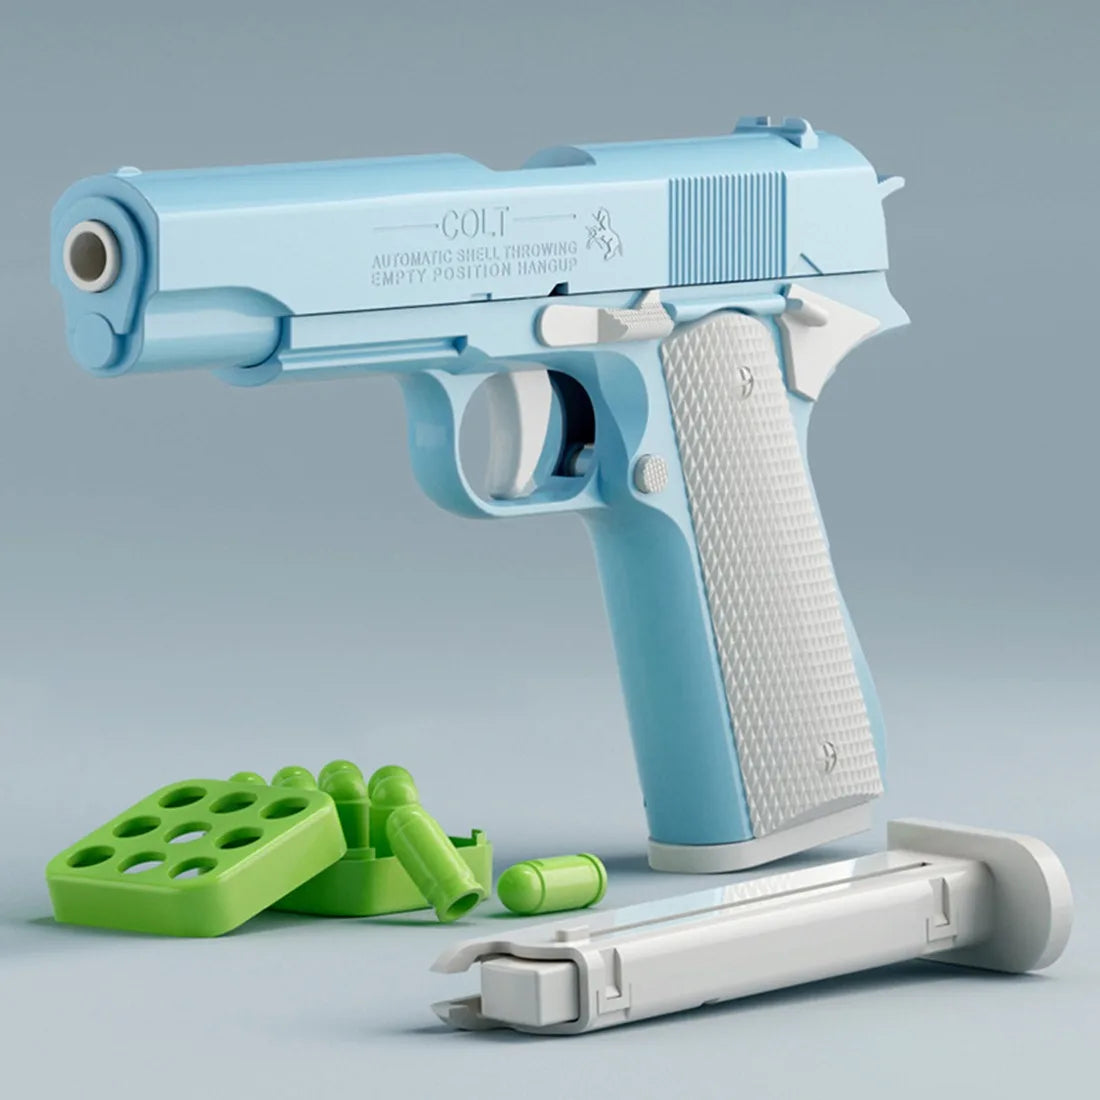 3D Printed Gun Non-Firing Mini Model Gravity Straight Jump Toys Kids Stress Relief Toy Christmas Gift